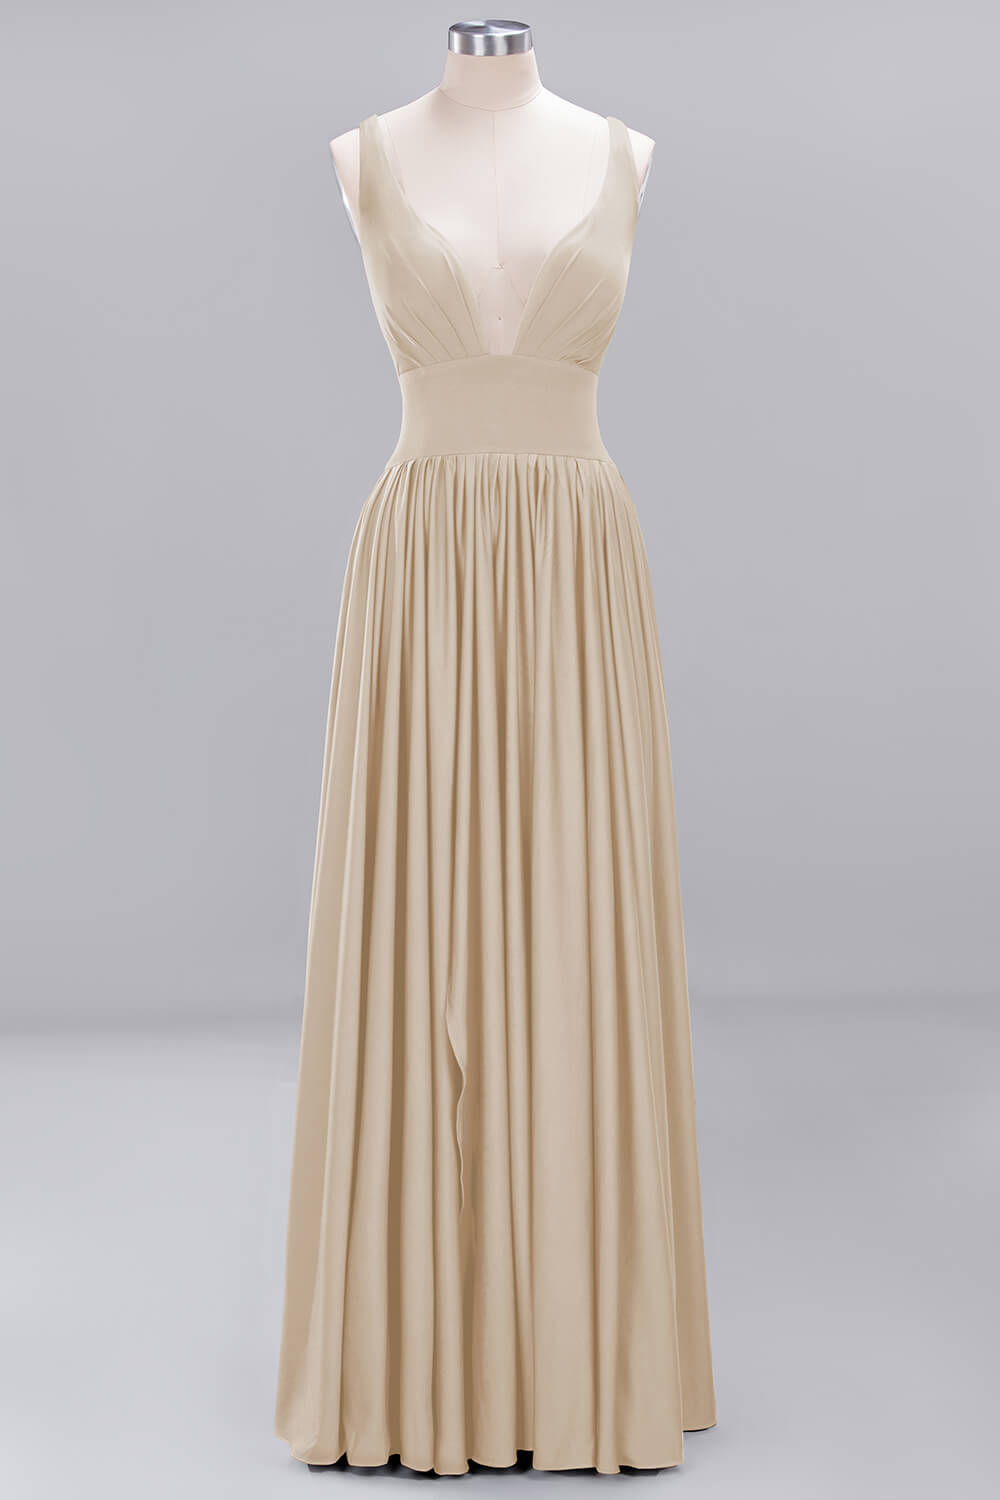 Greek Style Bridesmaid Dress